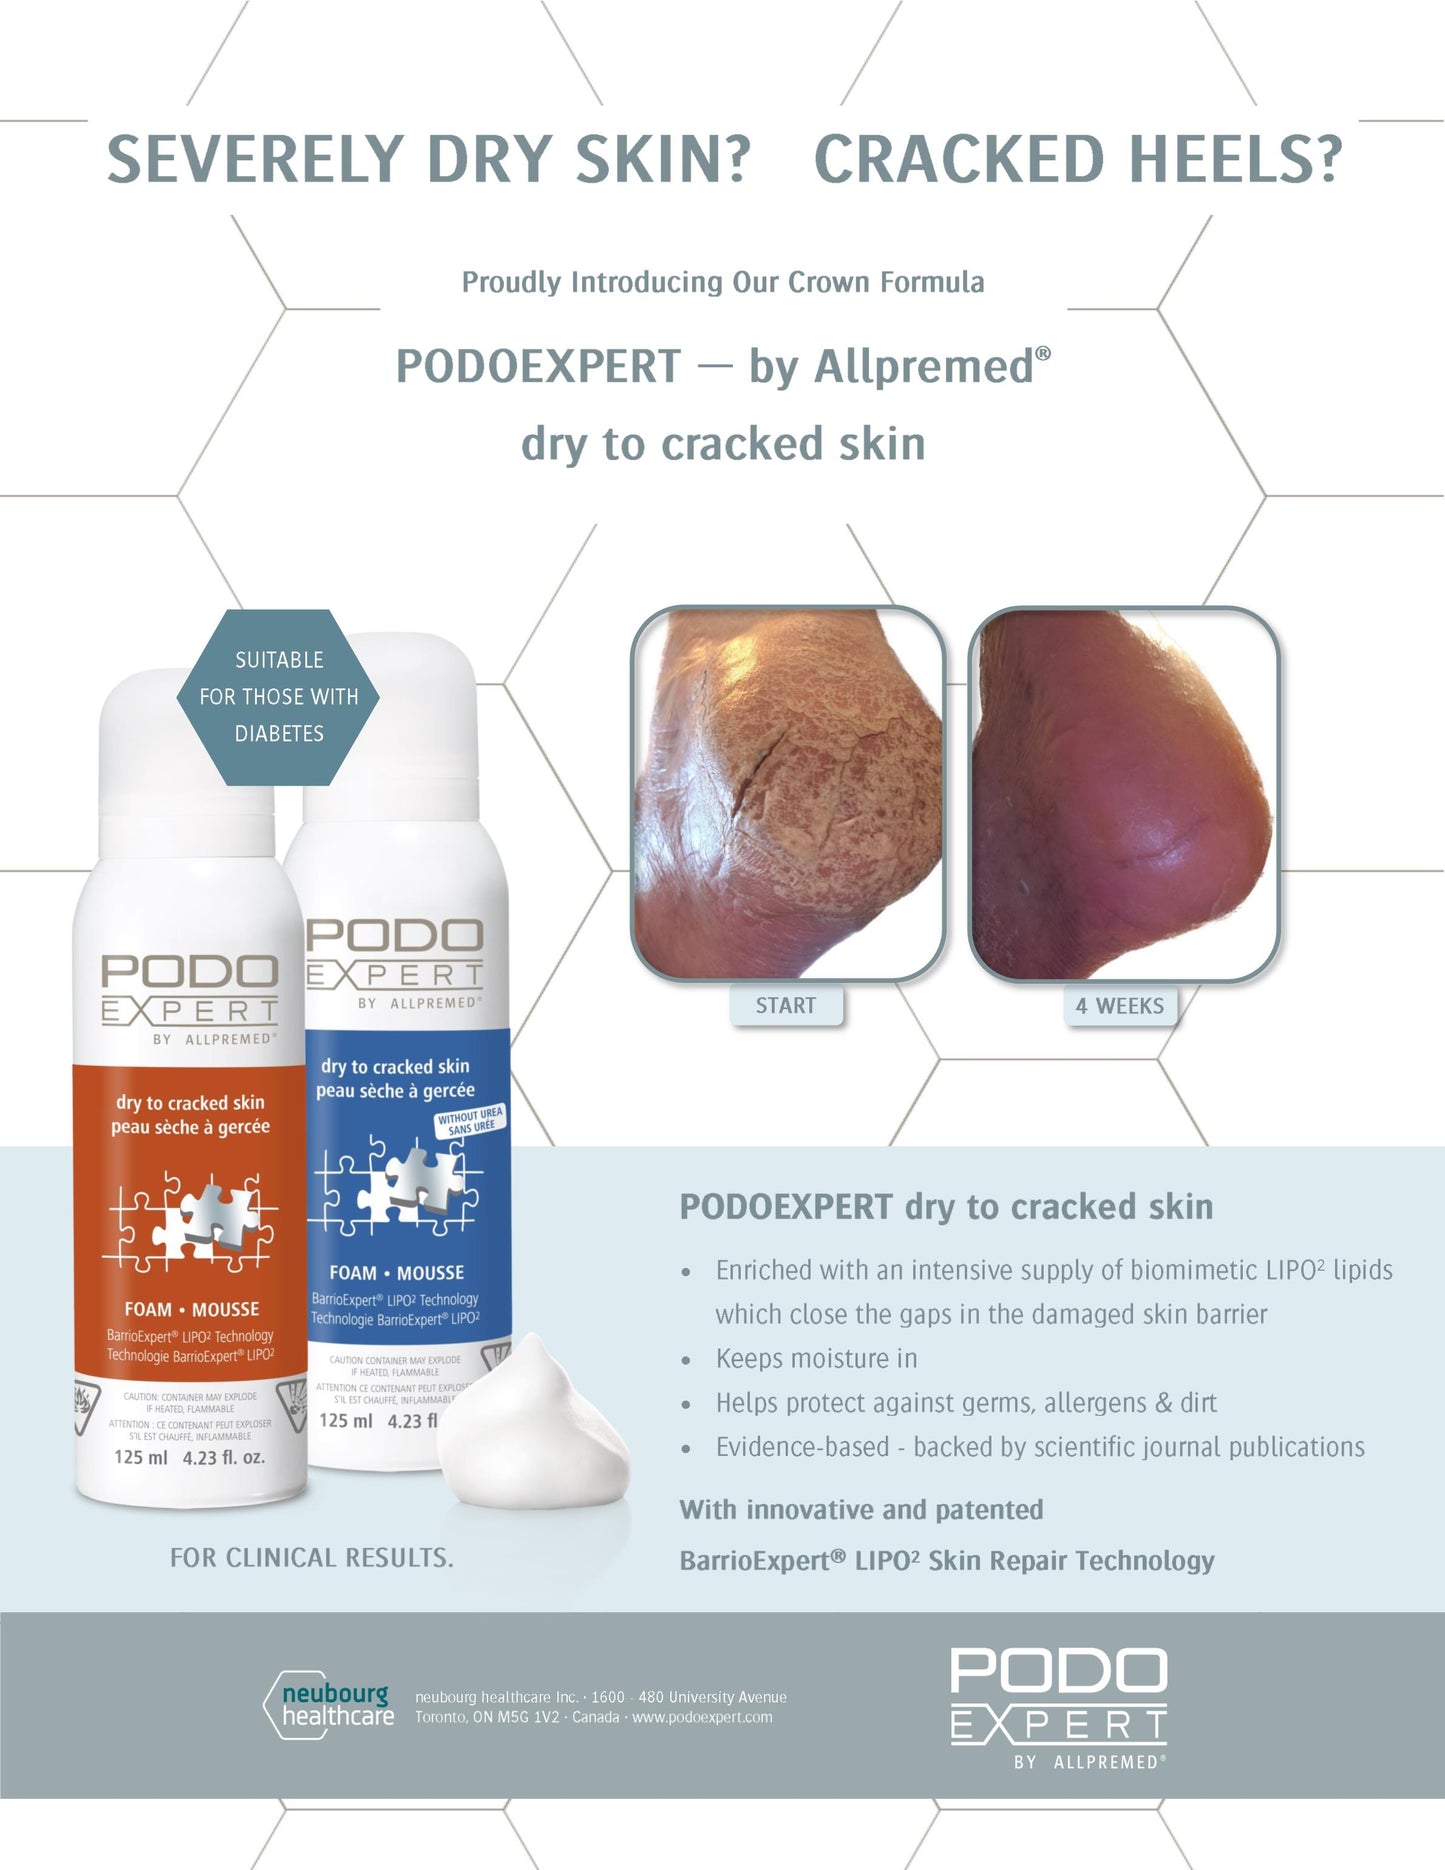 PODOEXPERT dry to cracked skin